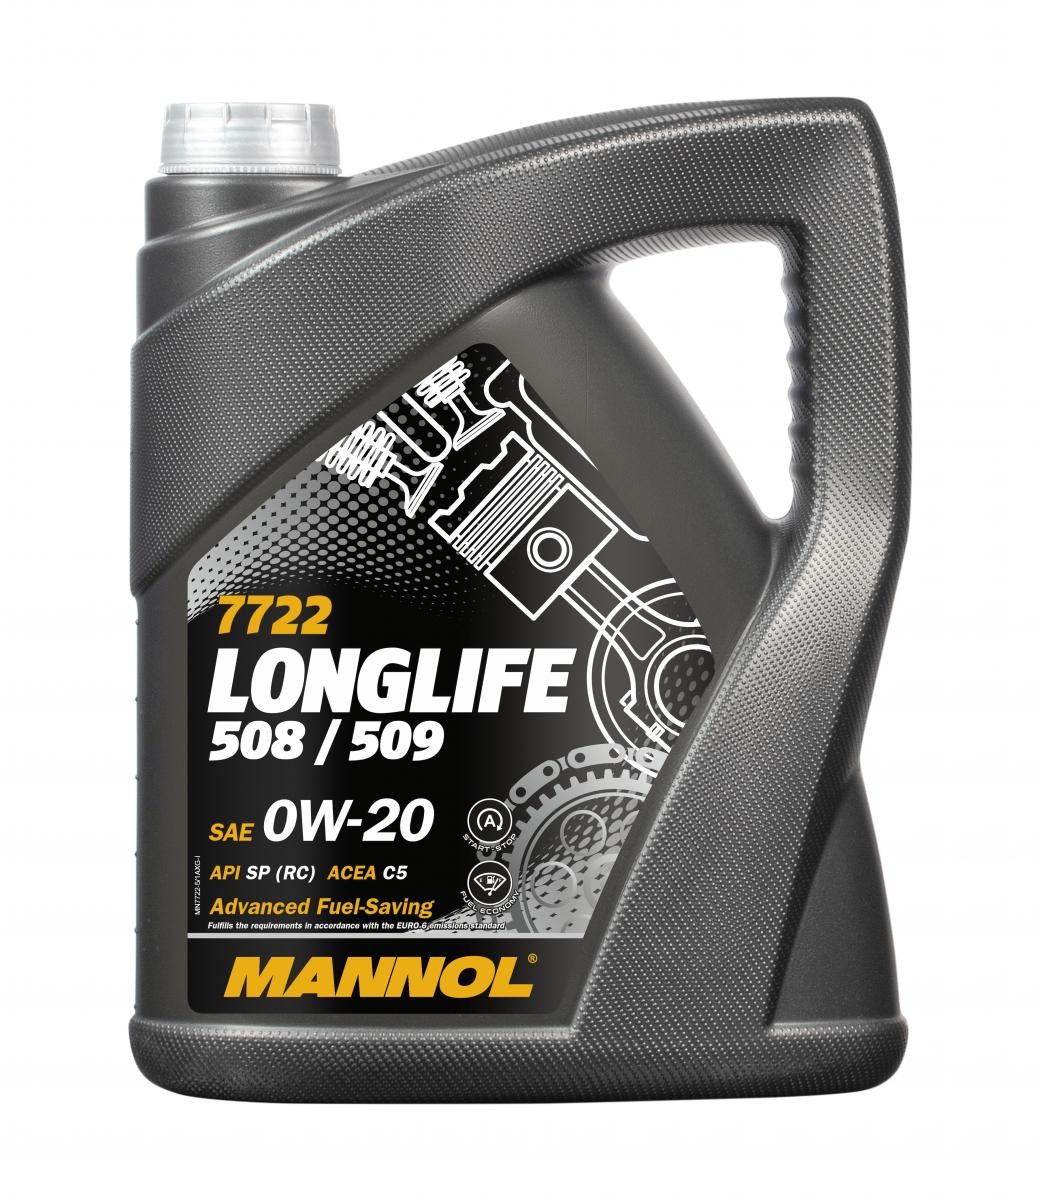 Motor oil 0W 20 longlife petrol - MN7722-5 MANNOL Longlife 508/509